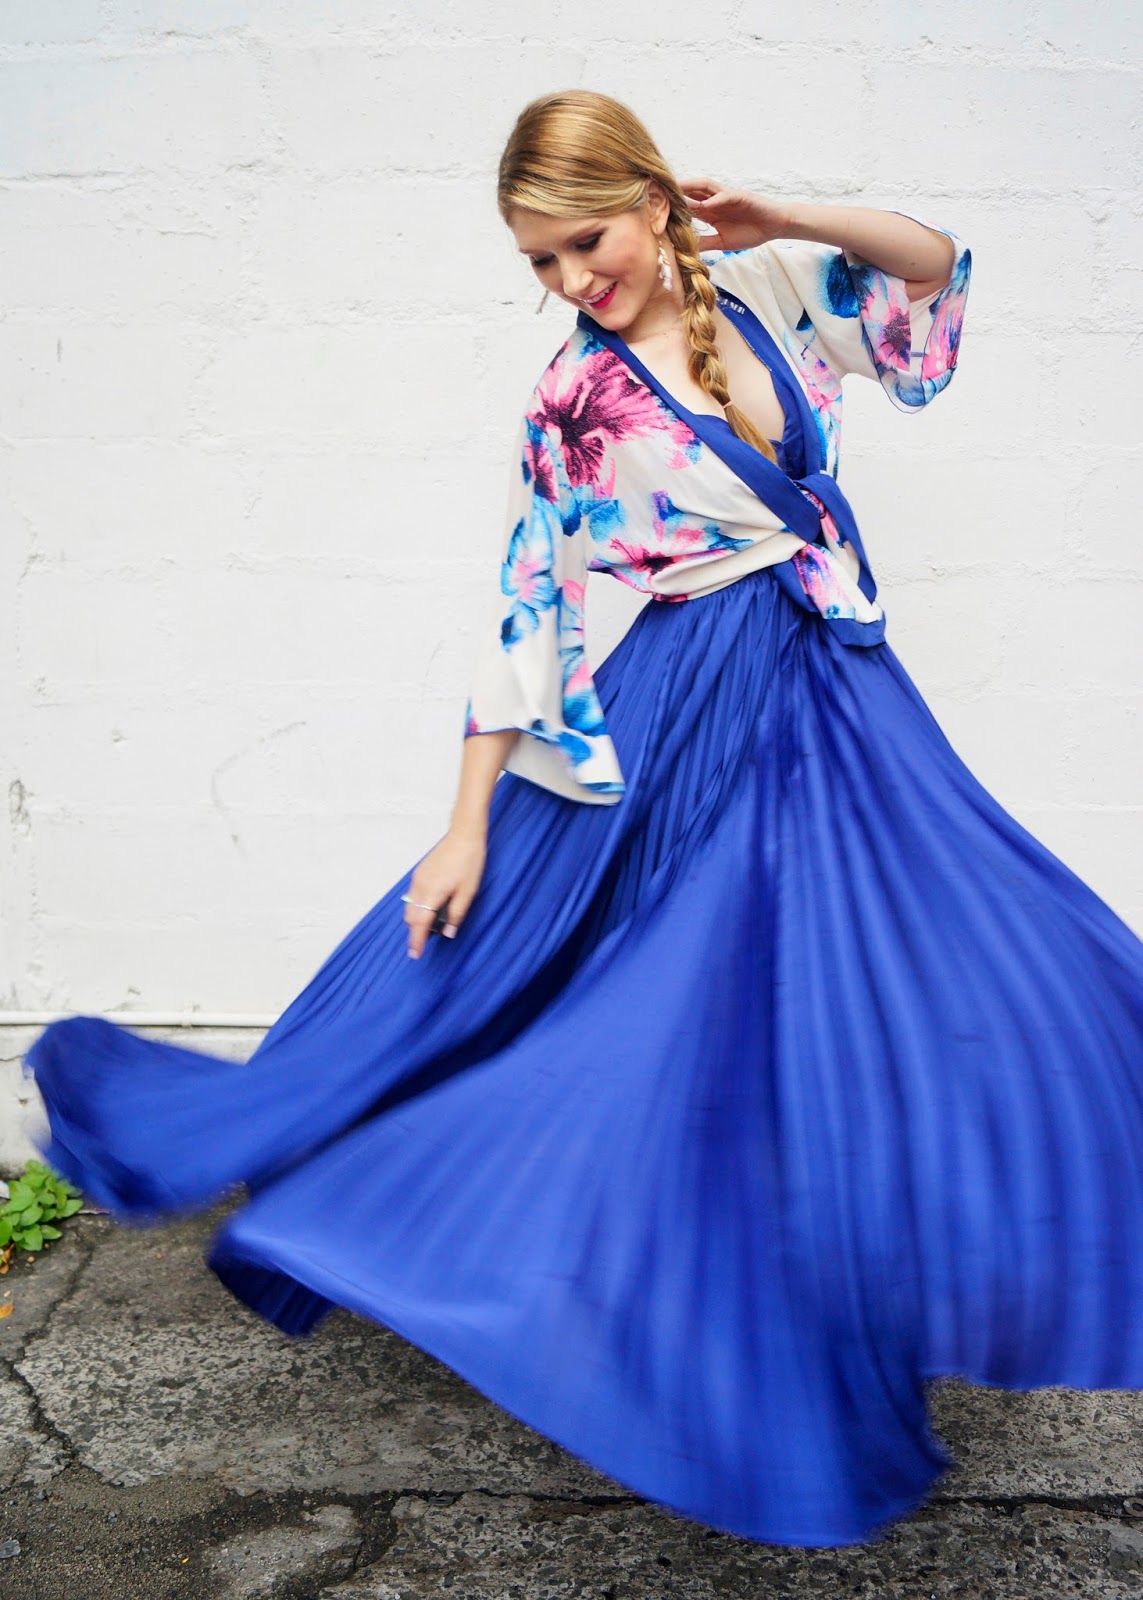 Click through for more Kimono outfit ideas